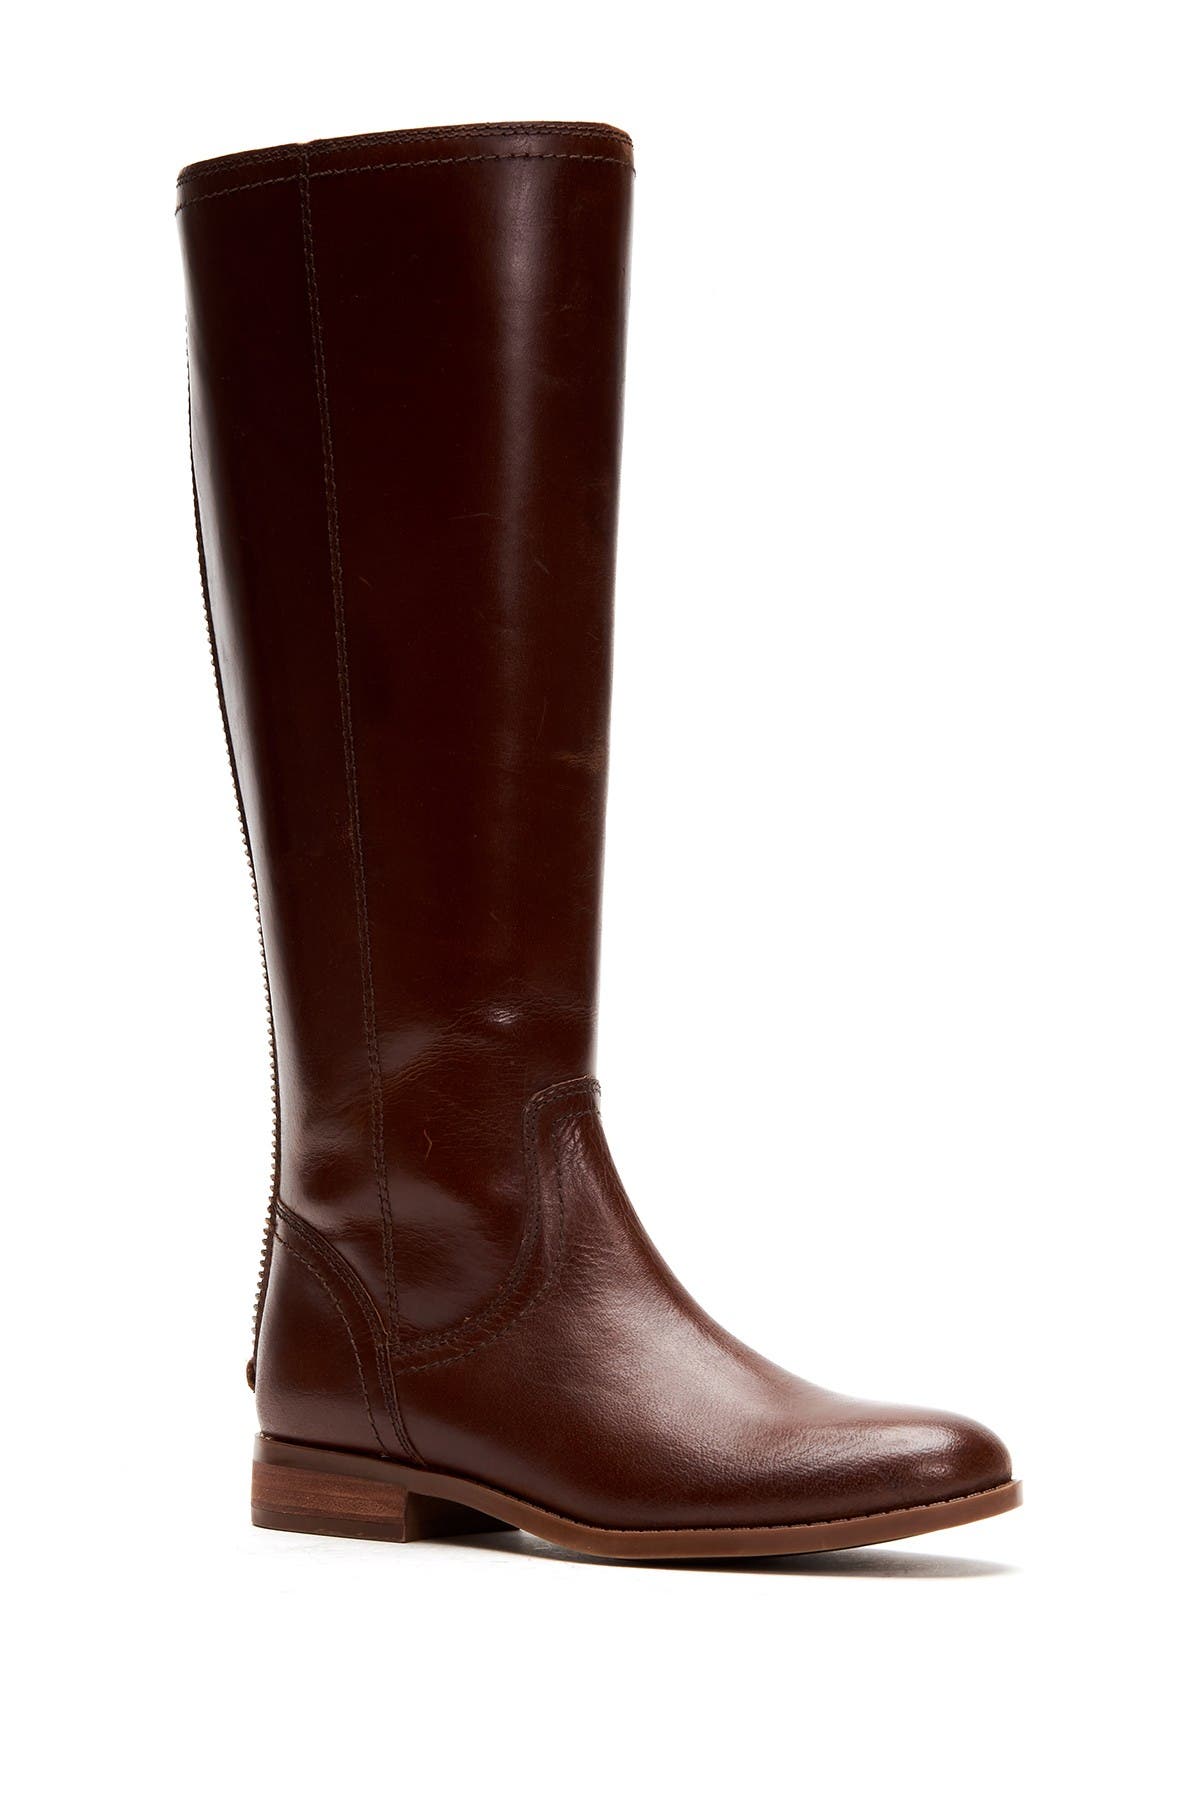 Frye \u0026 Co | Jolie Leather Tall Boot 